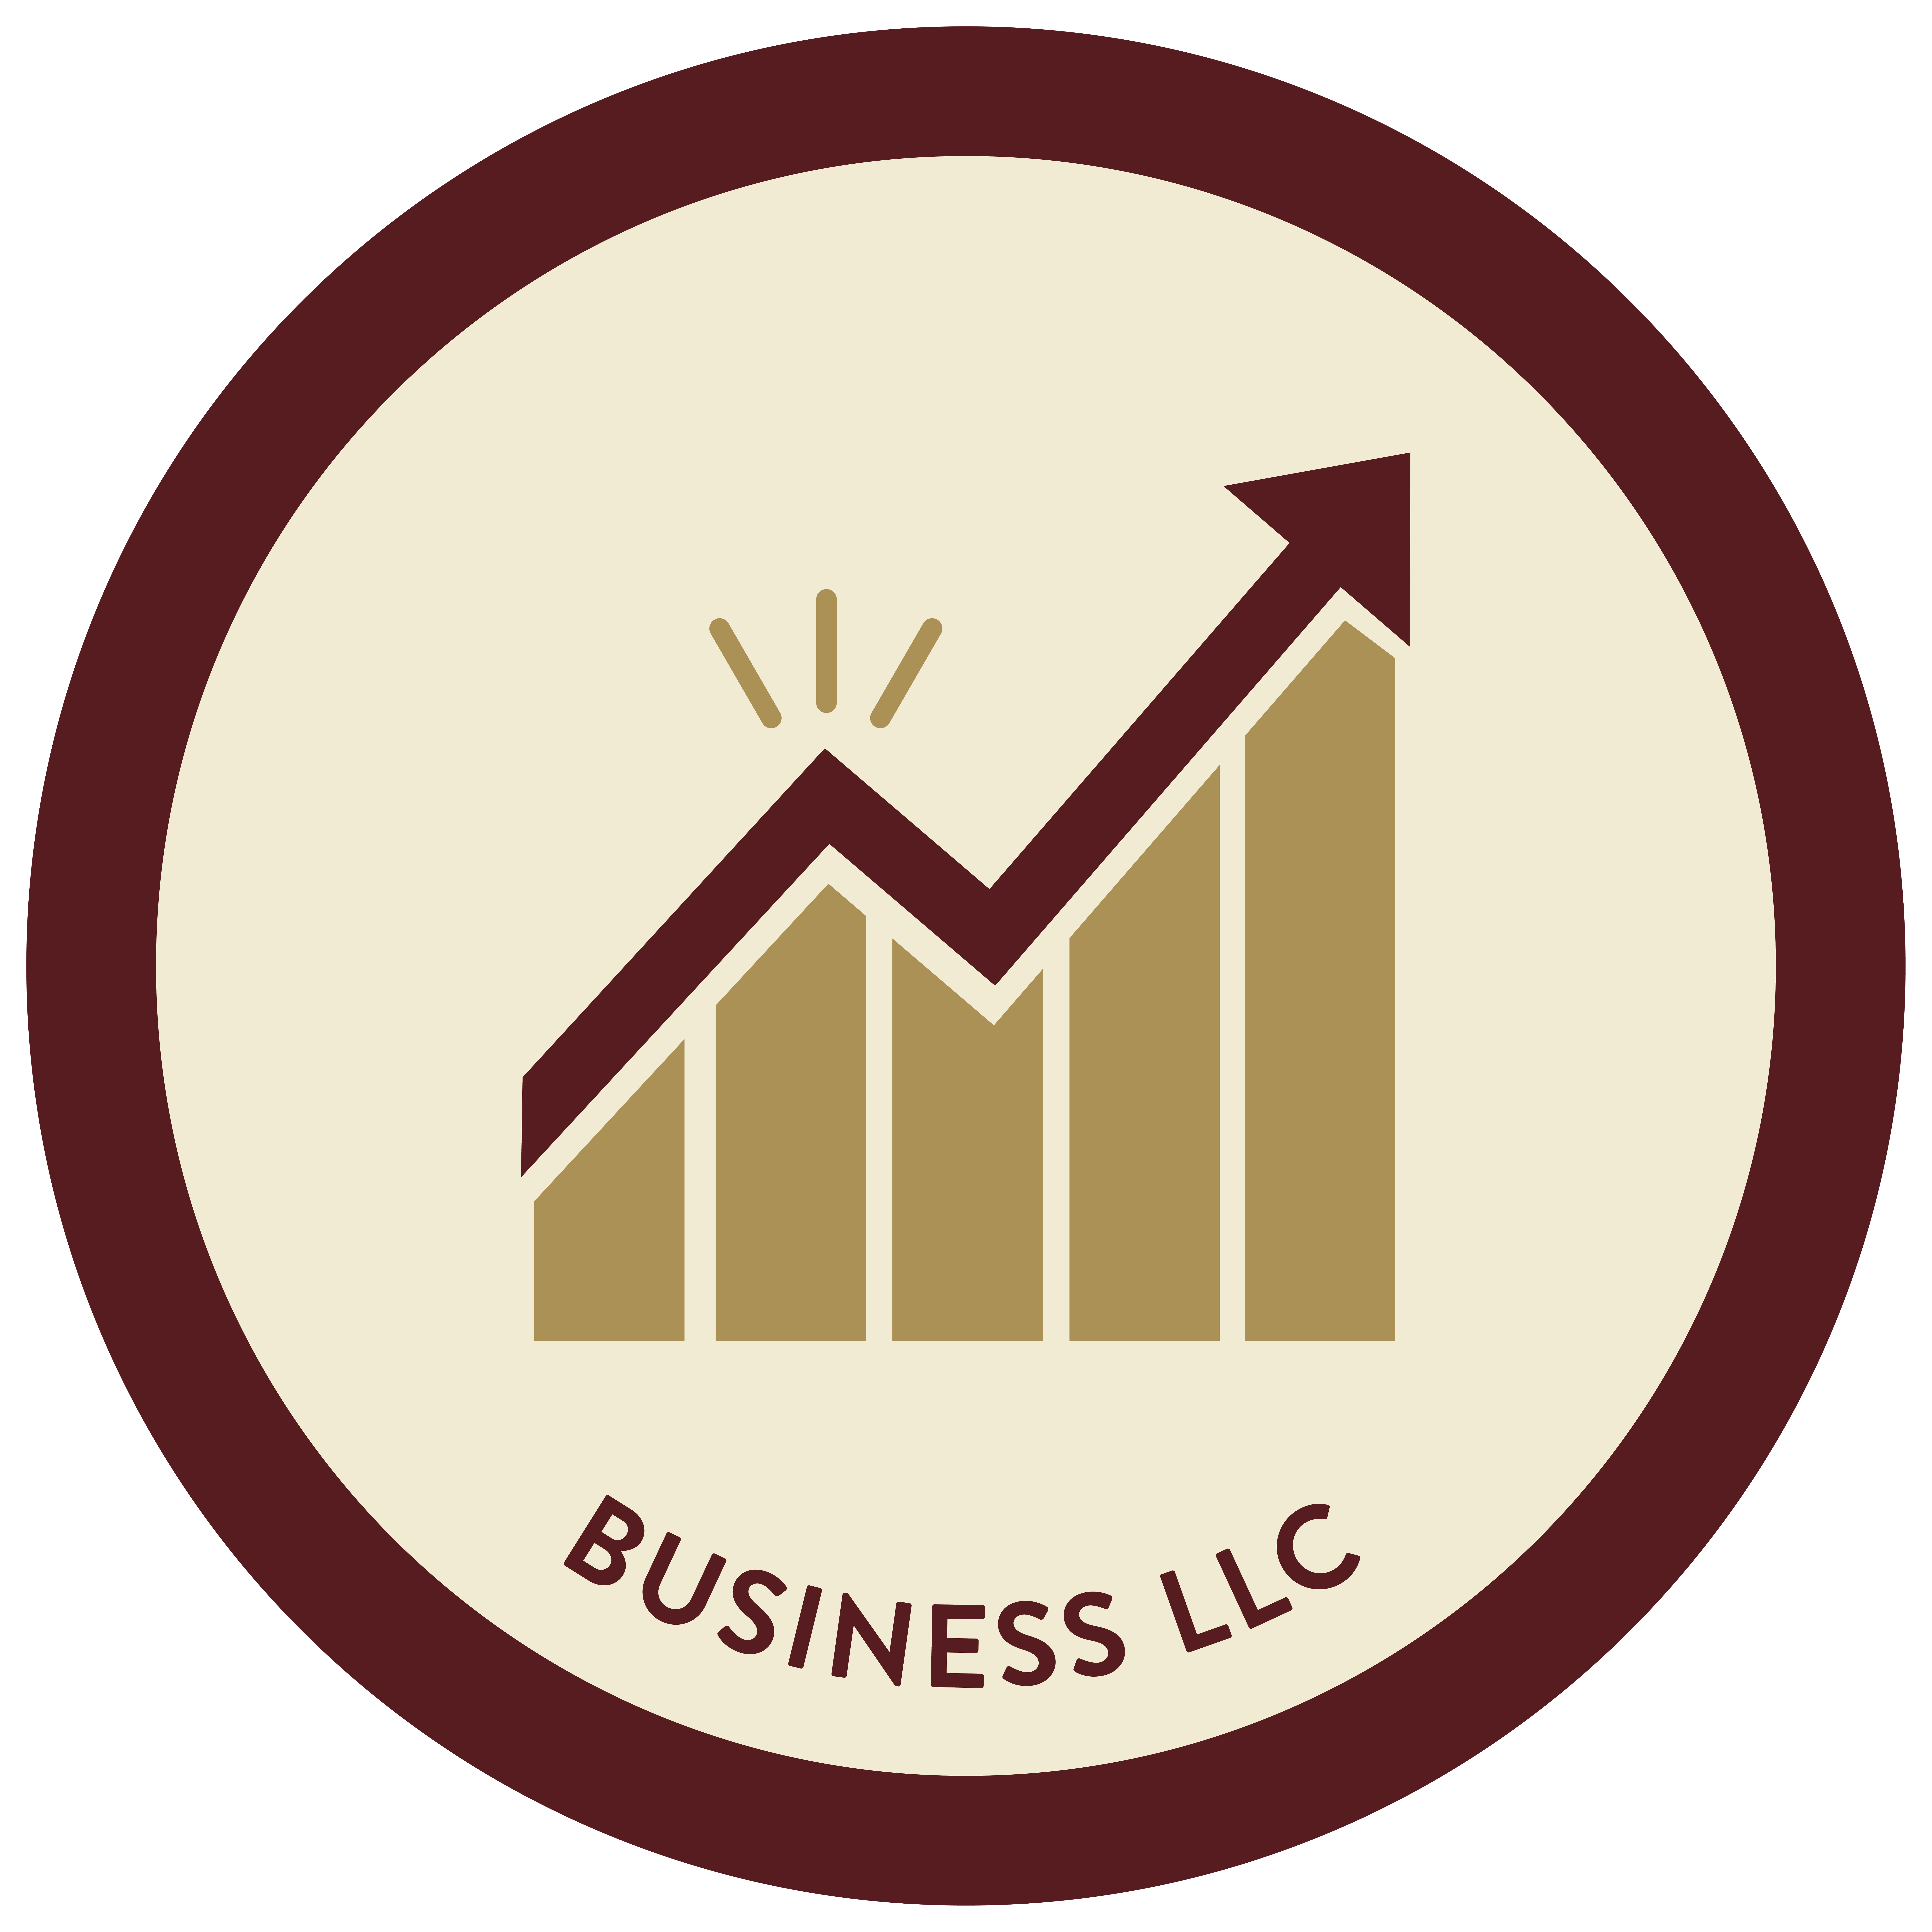 Business LLC icon